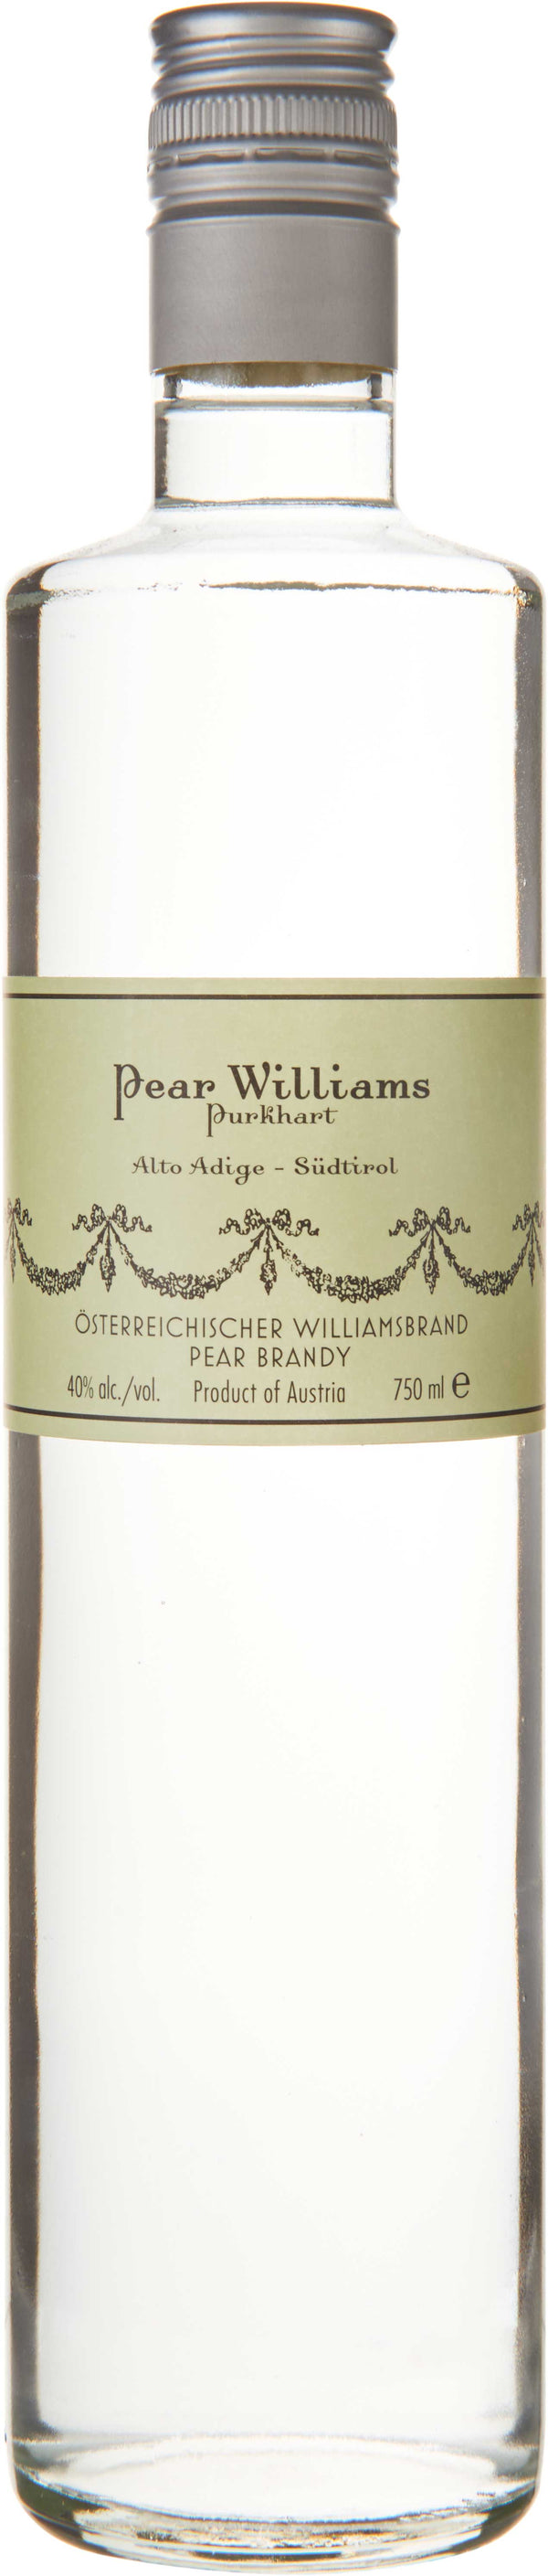 PEAR WILLIAMS PURKHART PEAR Brandy BeverageWarehouse